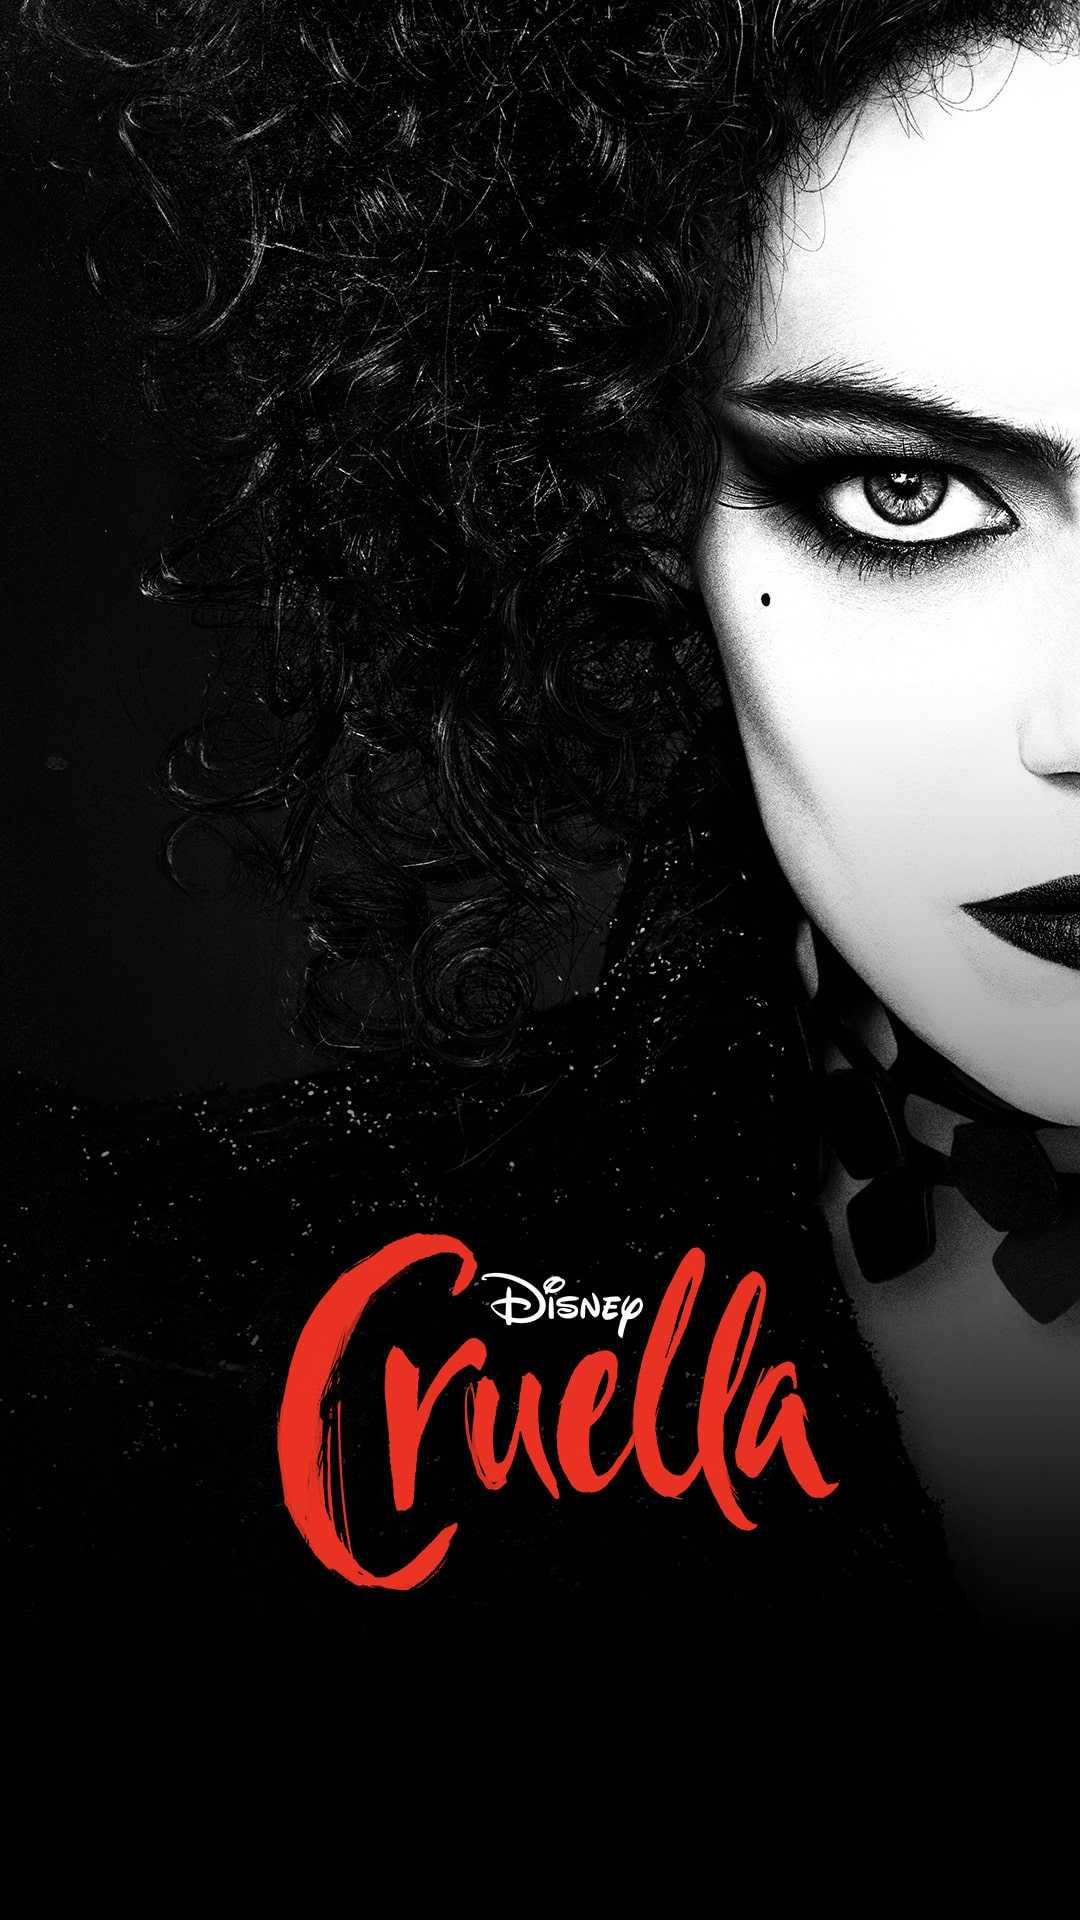 Disney's Cruella 2021 Film Poster Background